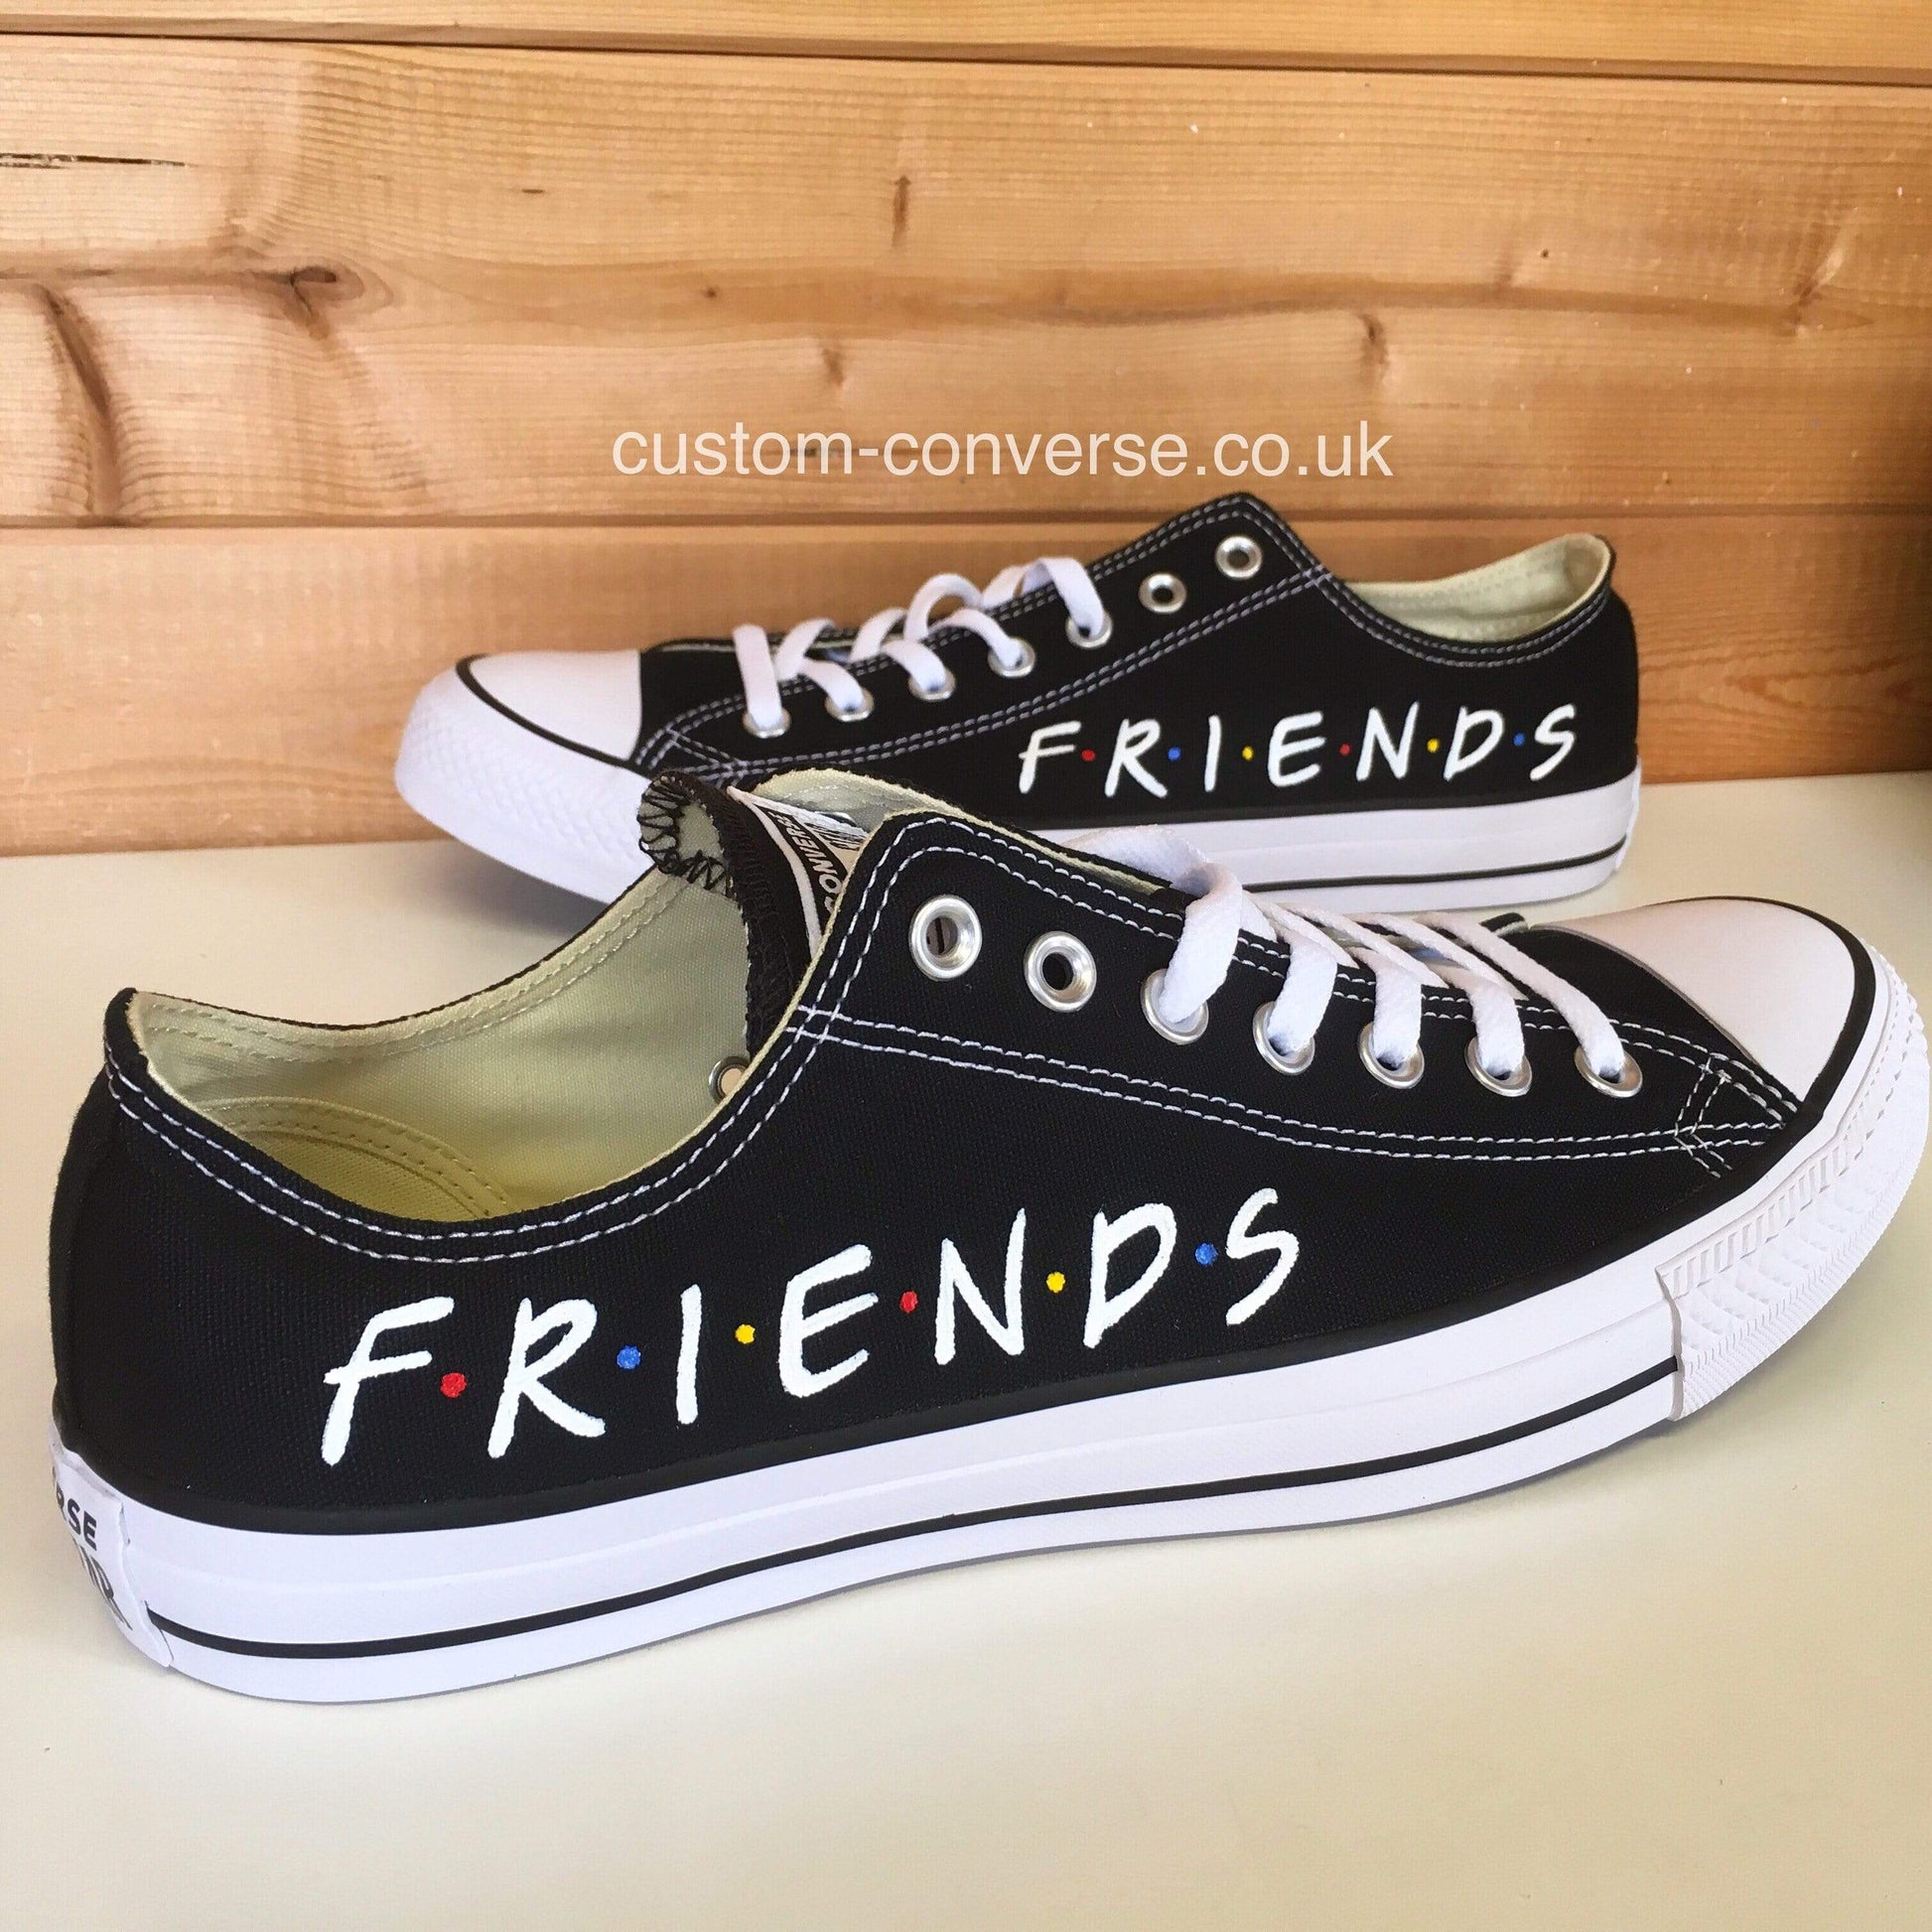 Friends - Custom Converse Ltd.